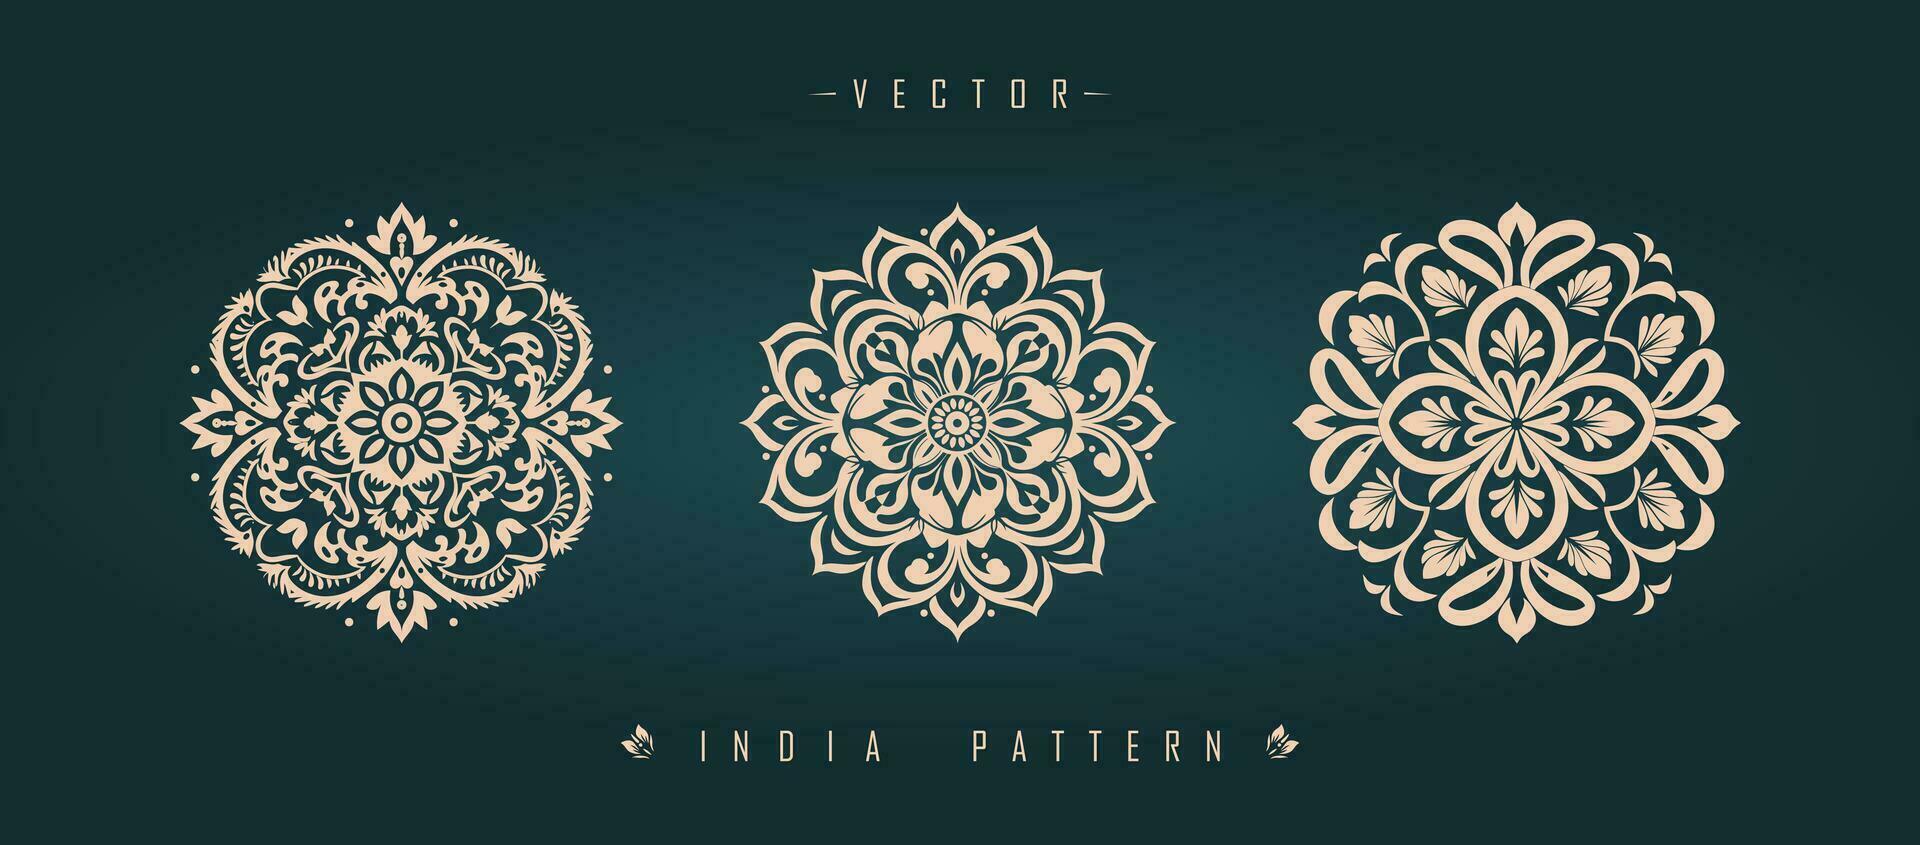 indisch traditionell Muster asiatisch Muster vektor